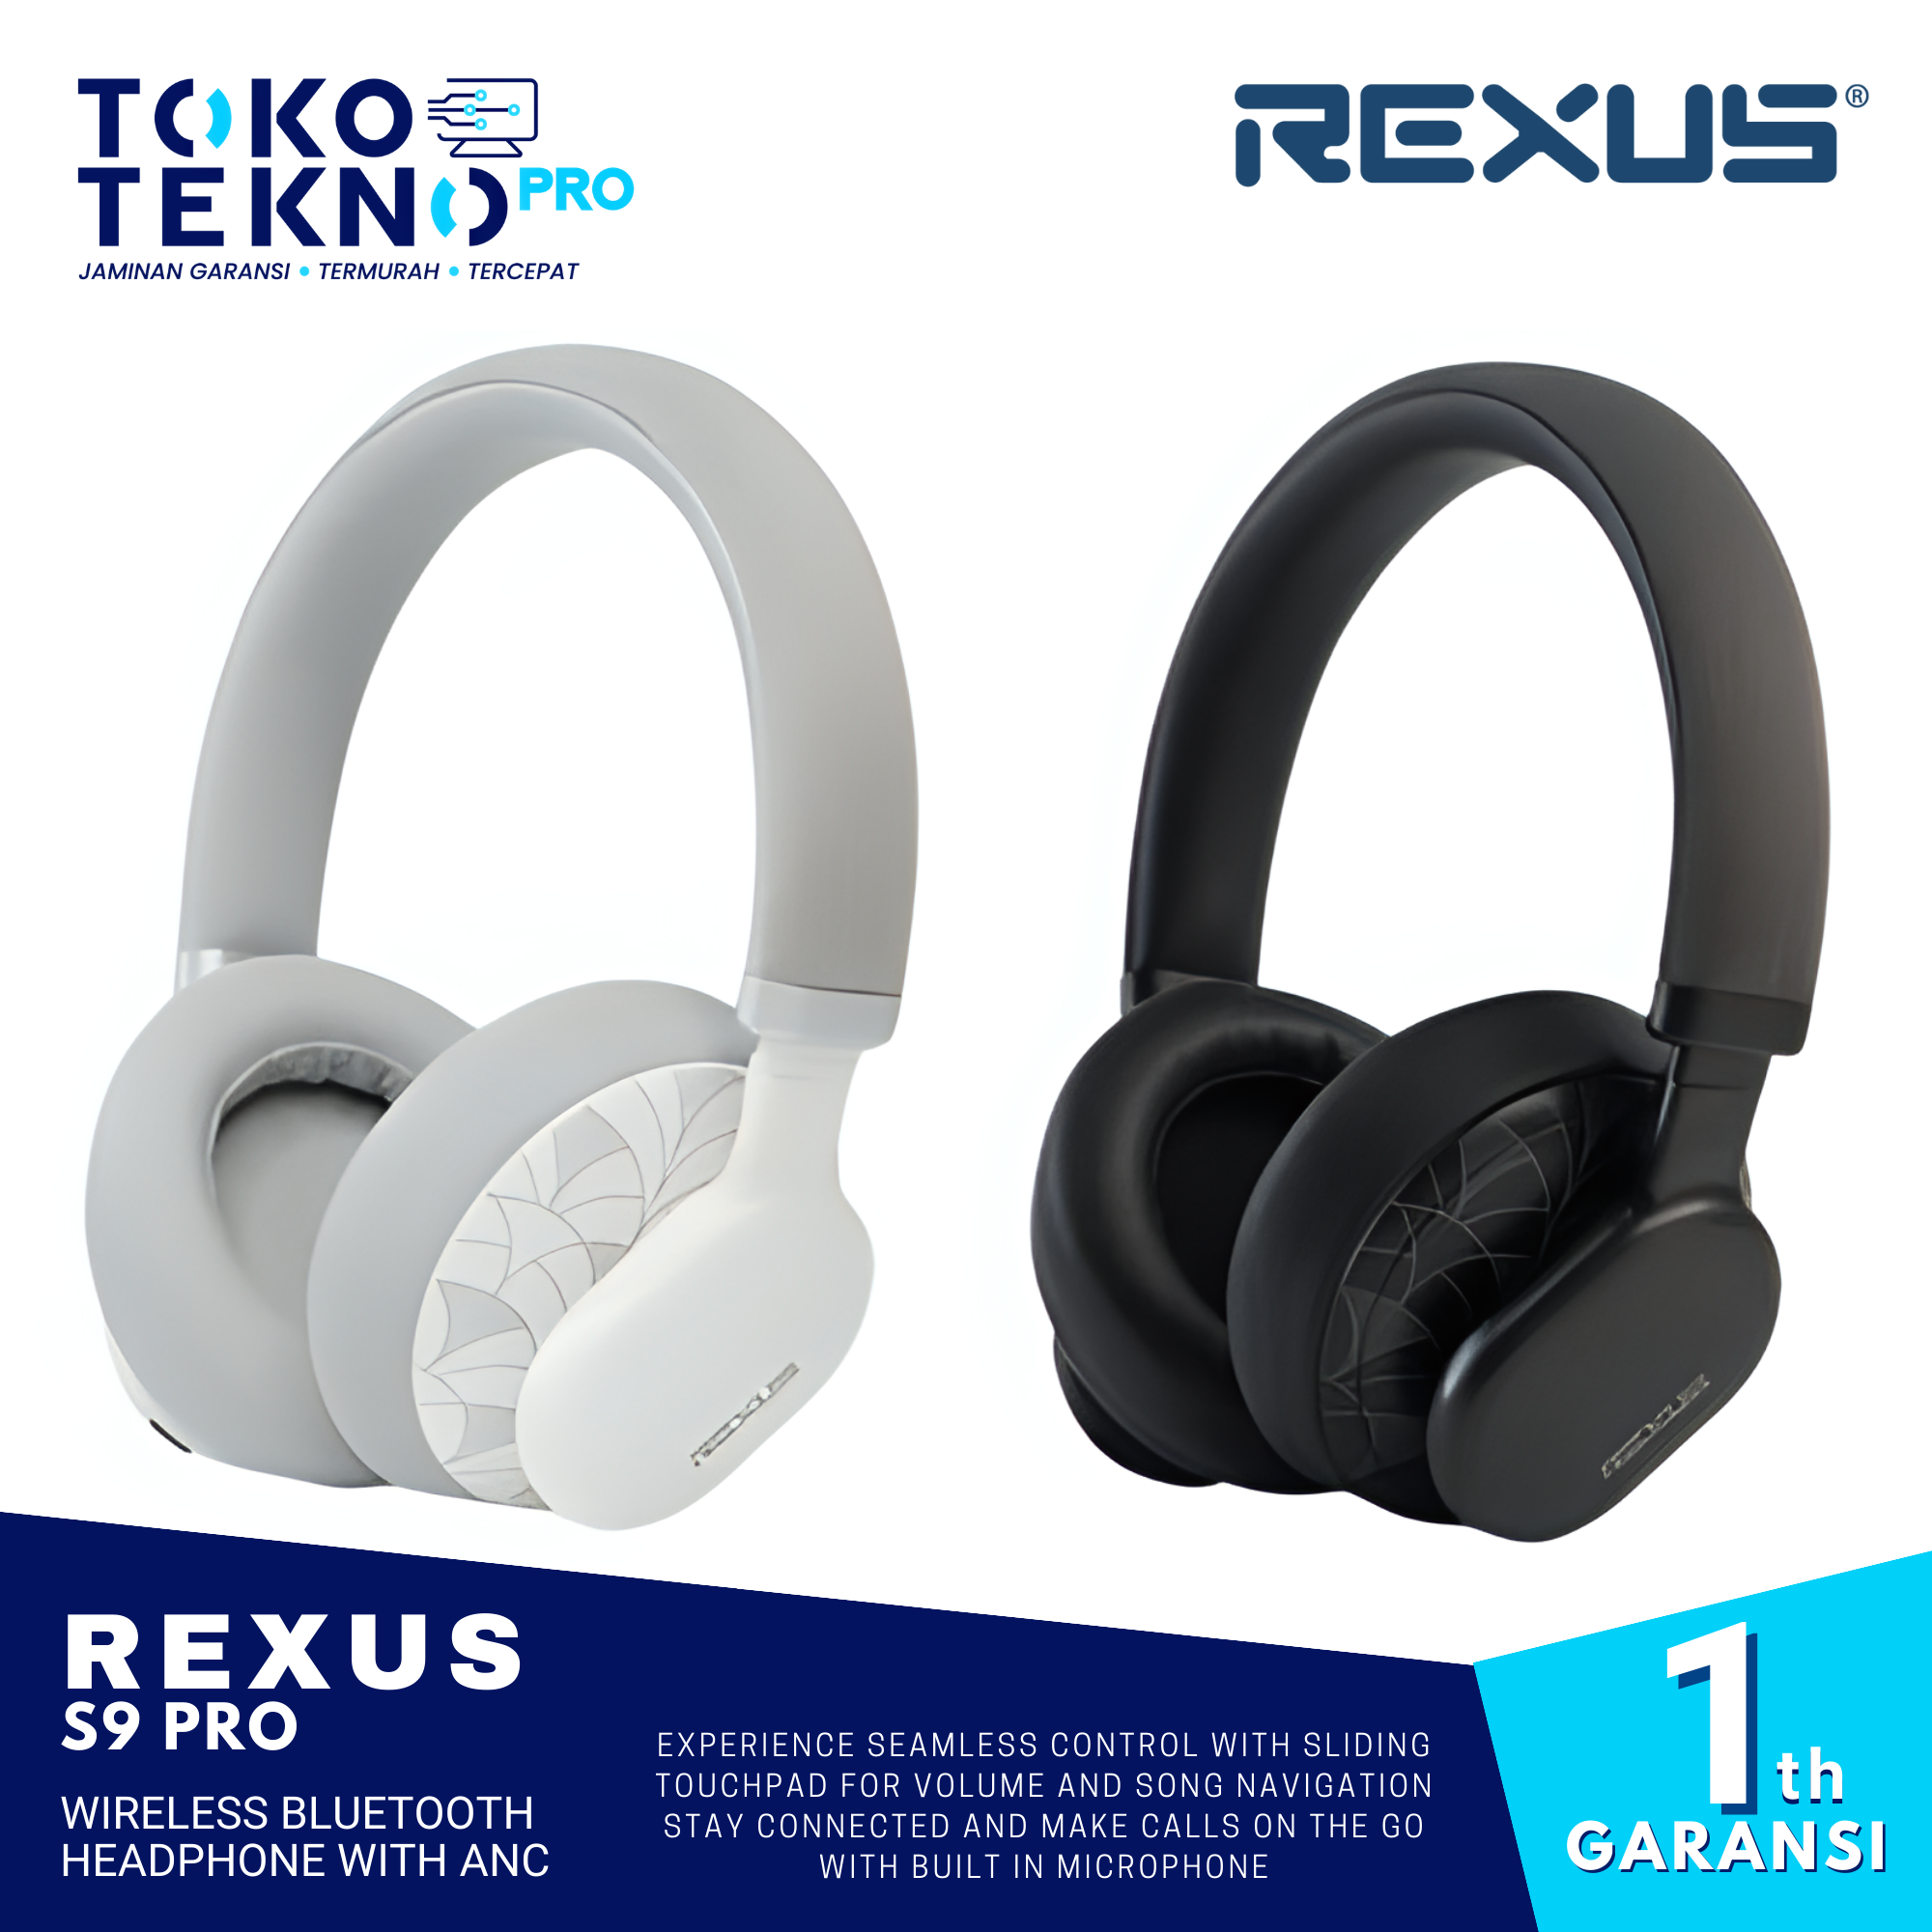 Rexus S9 Pro Wireless Bluetooth Headphone With ANC